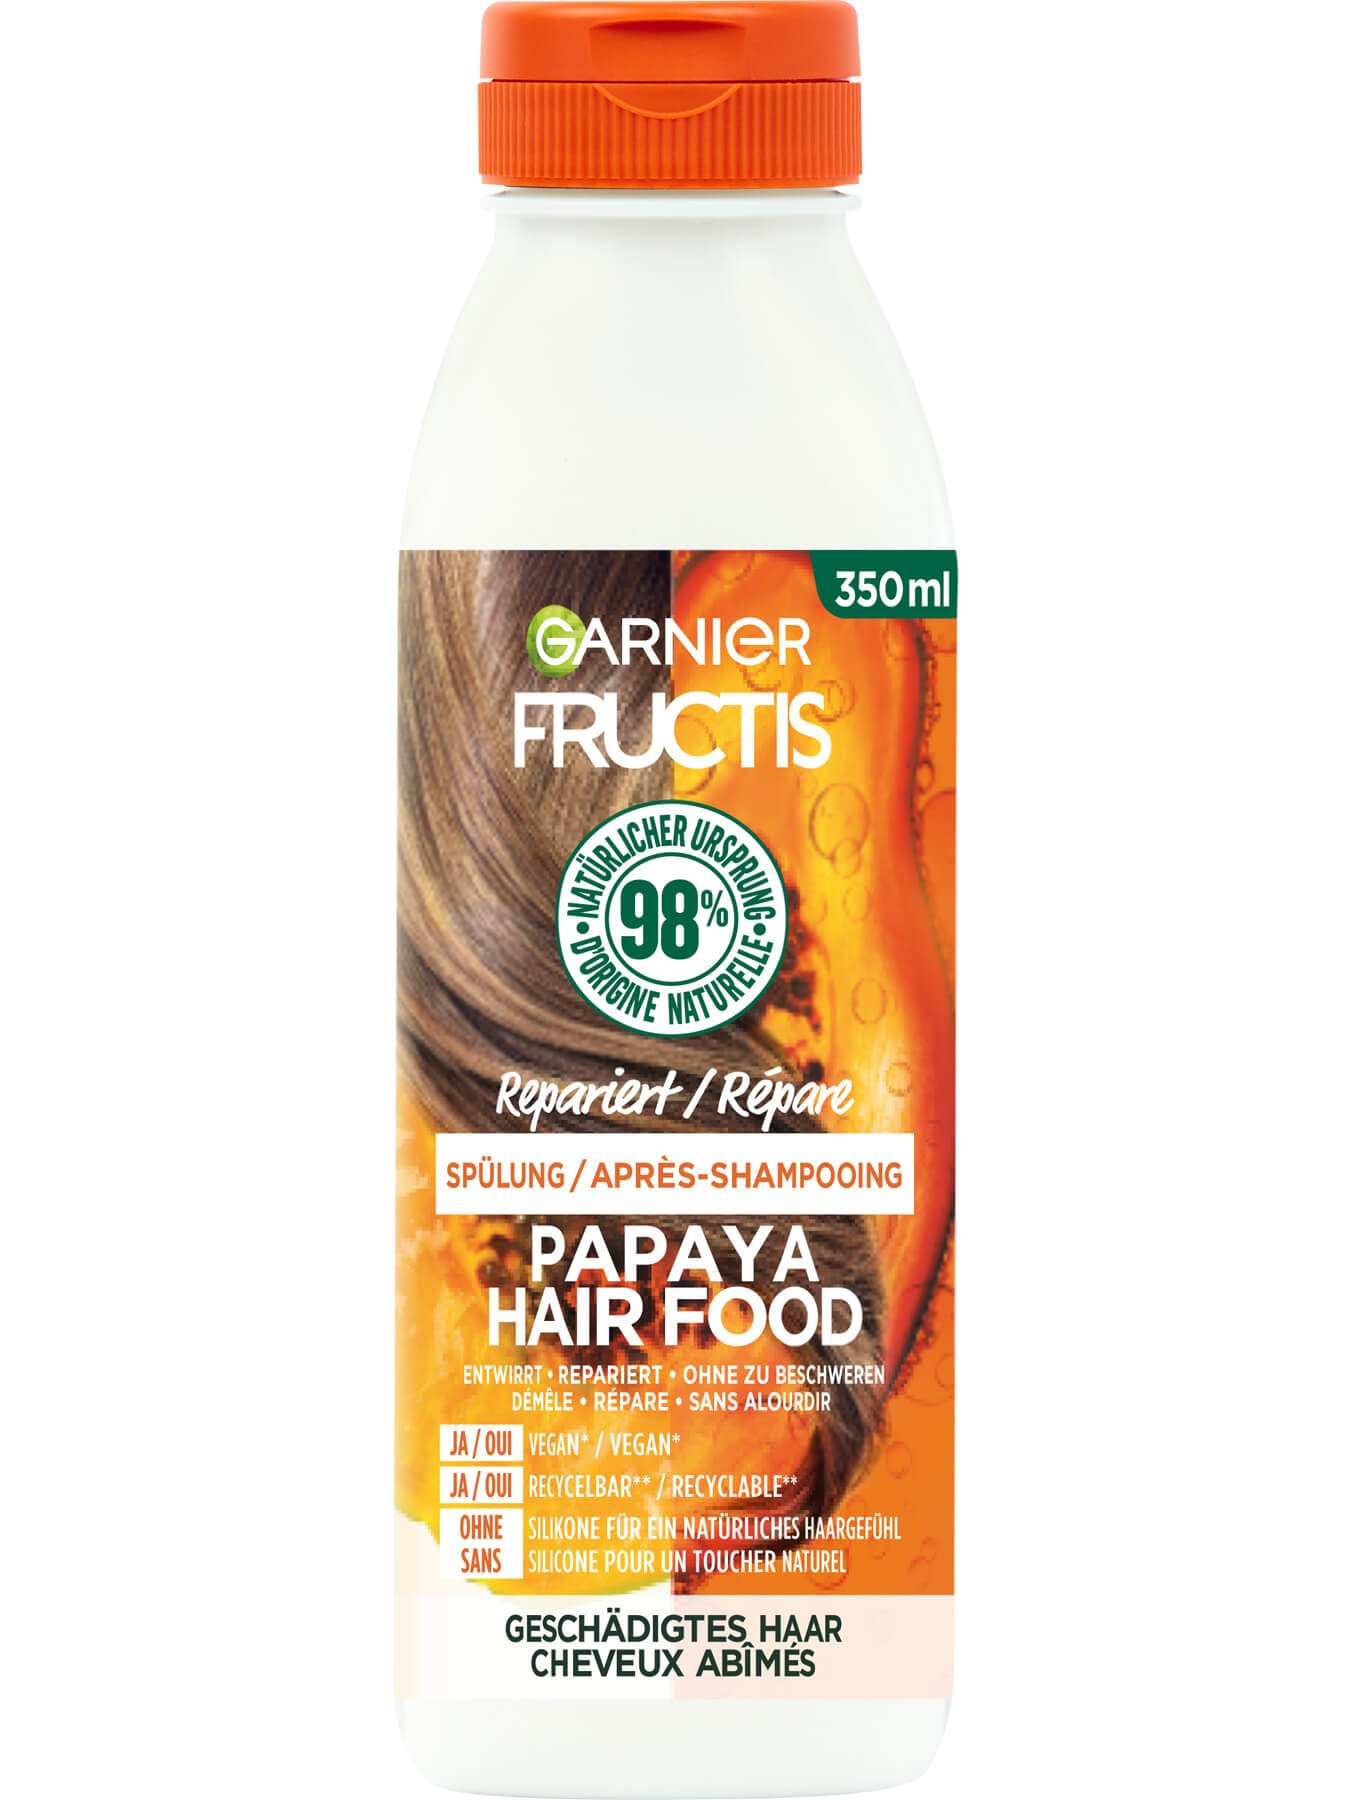 haarpflege haarpflege marken garnier fructis hair food papaya shampoo